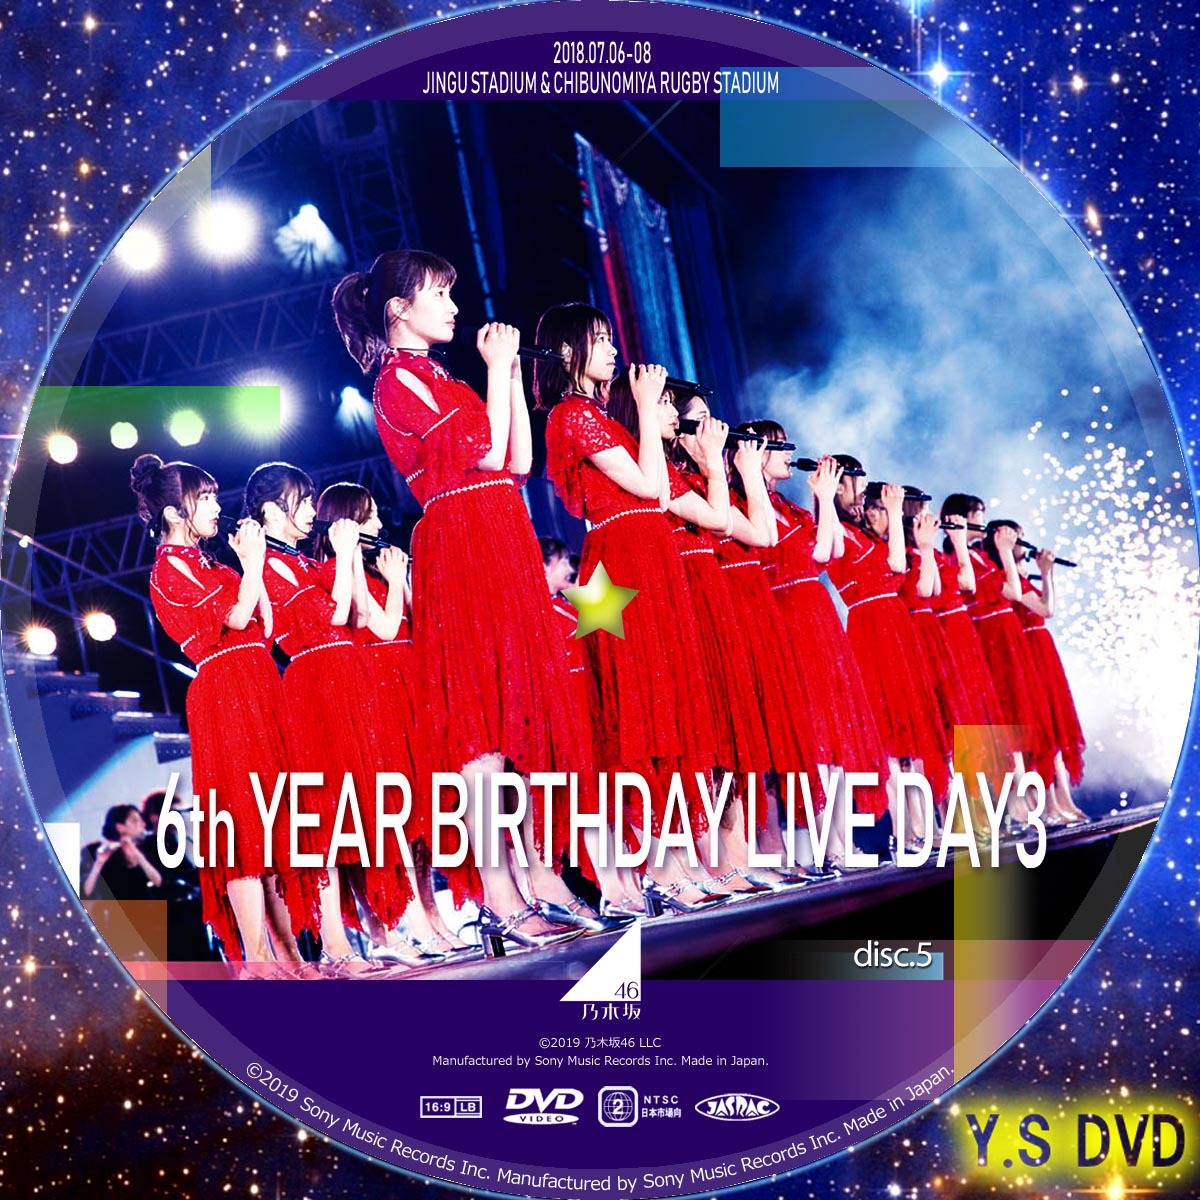 乃木坂46 6th yearbirthday LIVE DVD